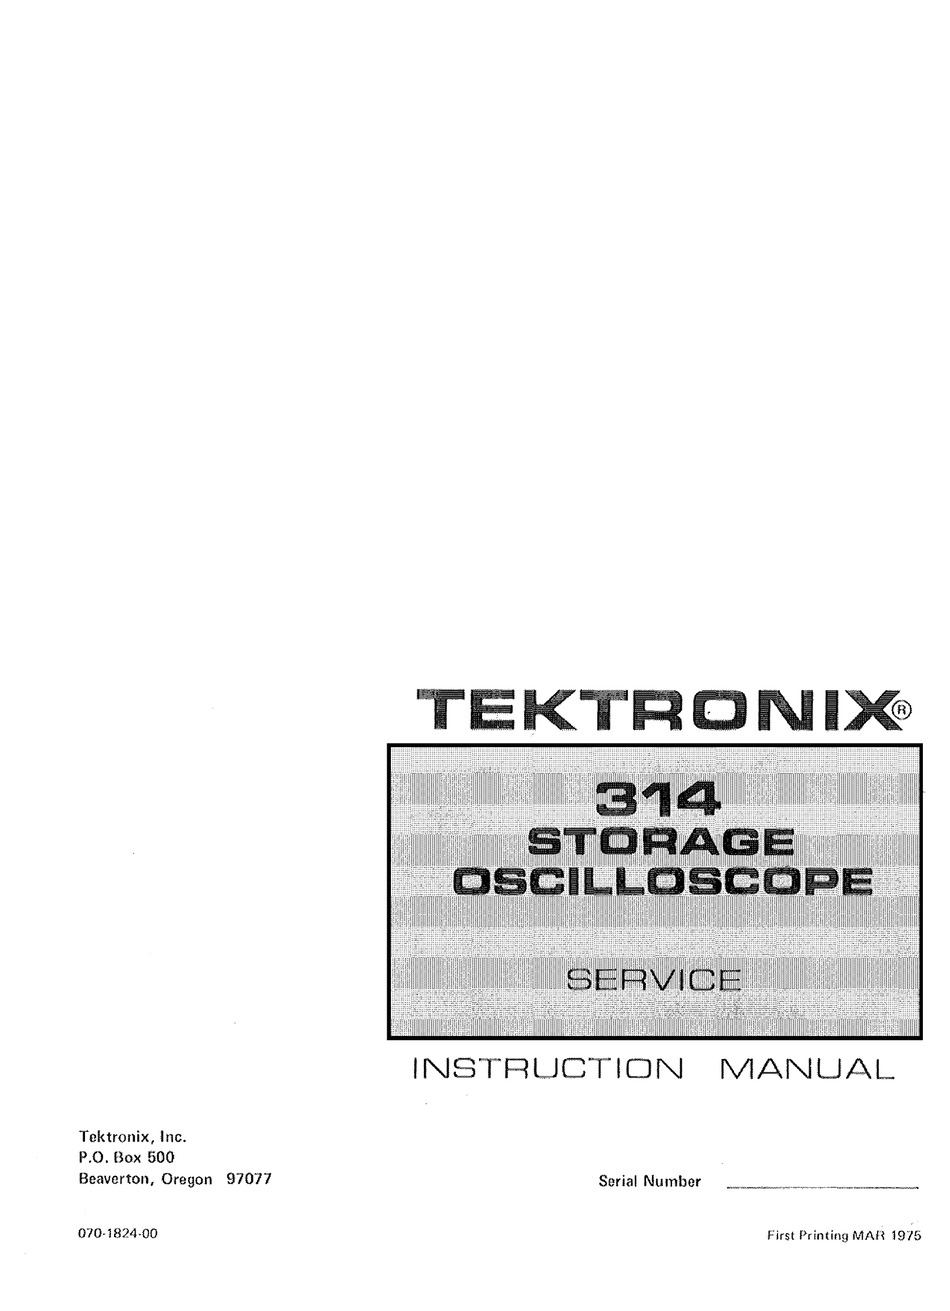 TEKTRONIX 7D14 Digital Compteur instruction service manual 070-1097-00 